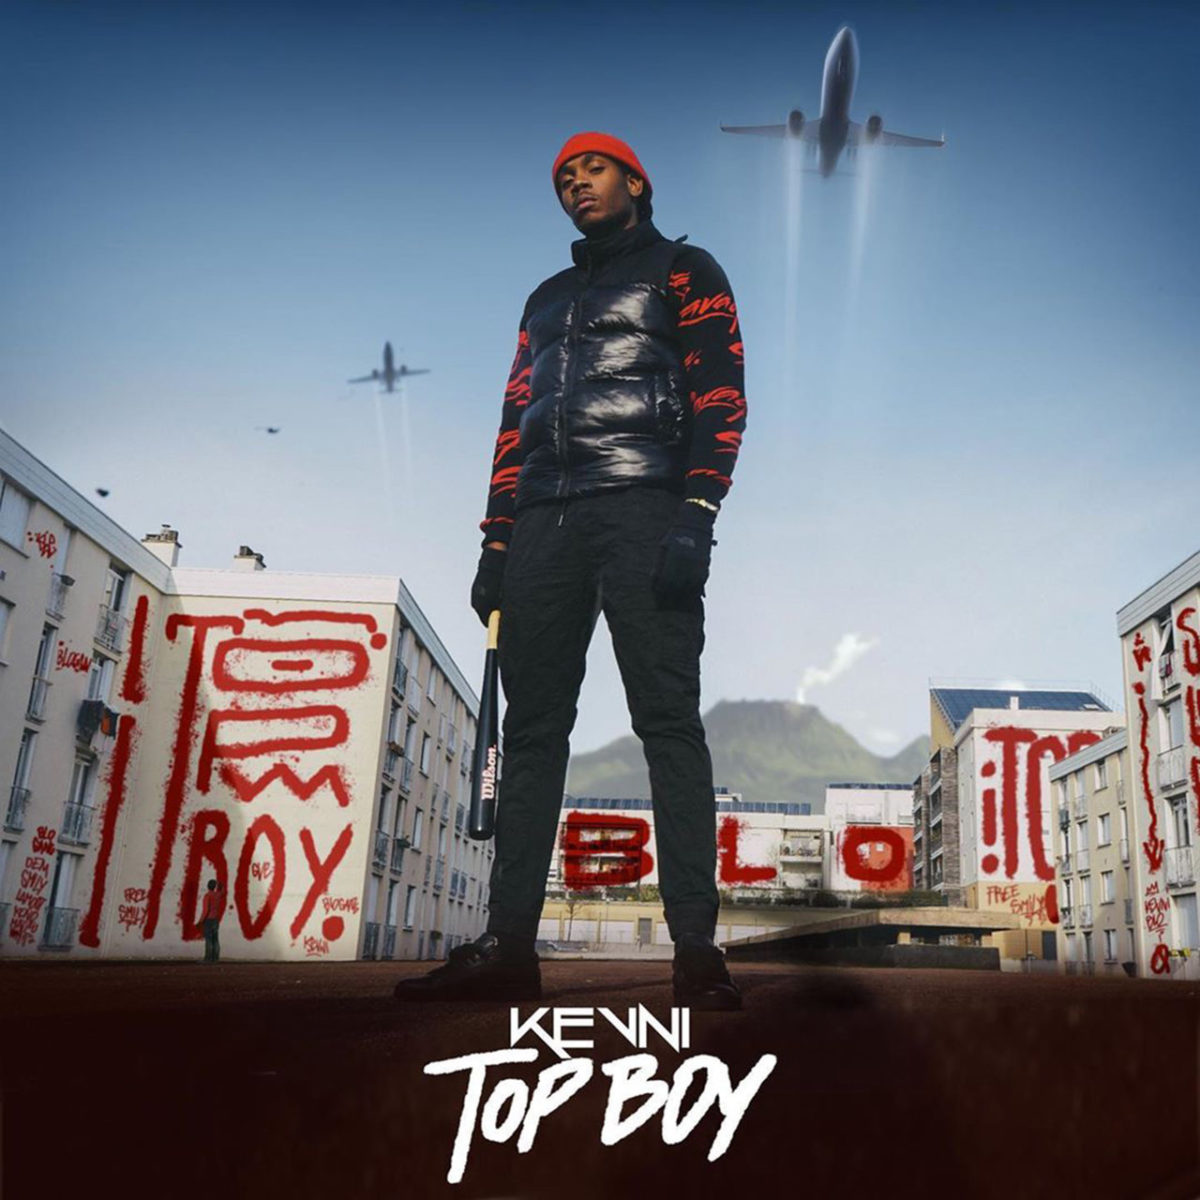 Kevni - Top Boy (Cover)